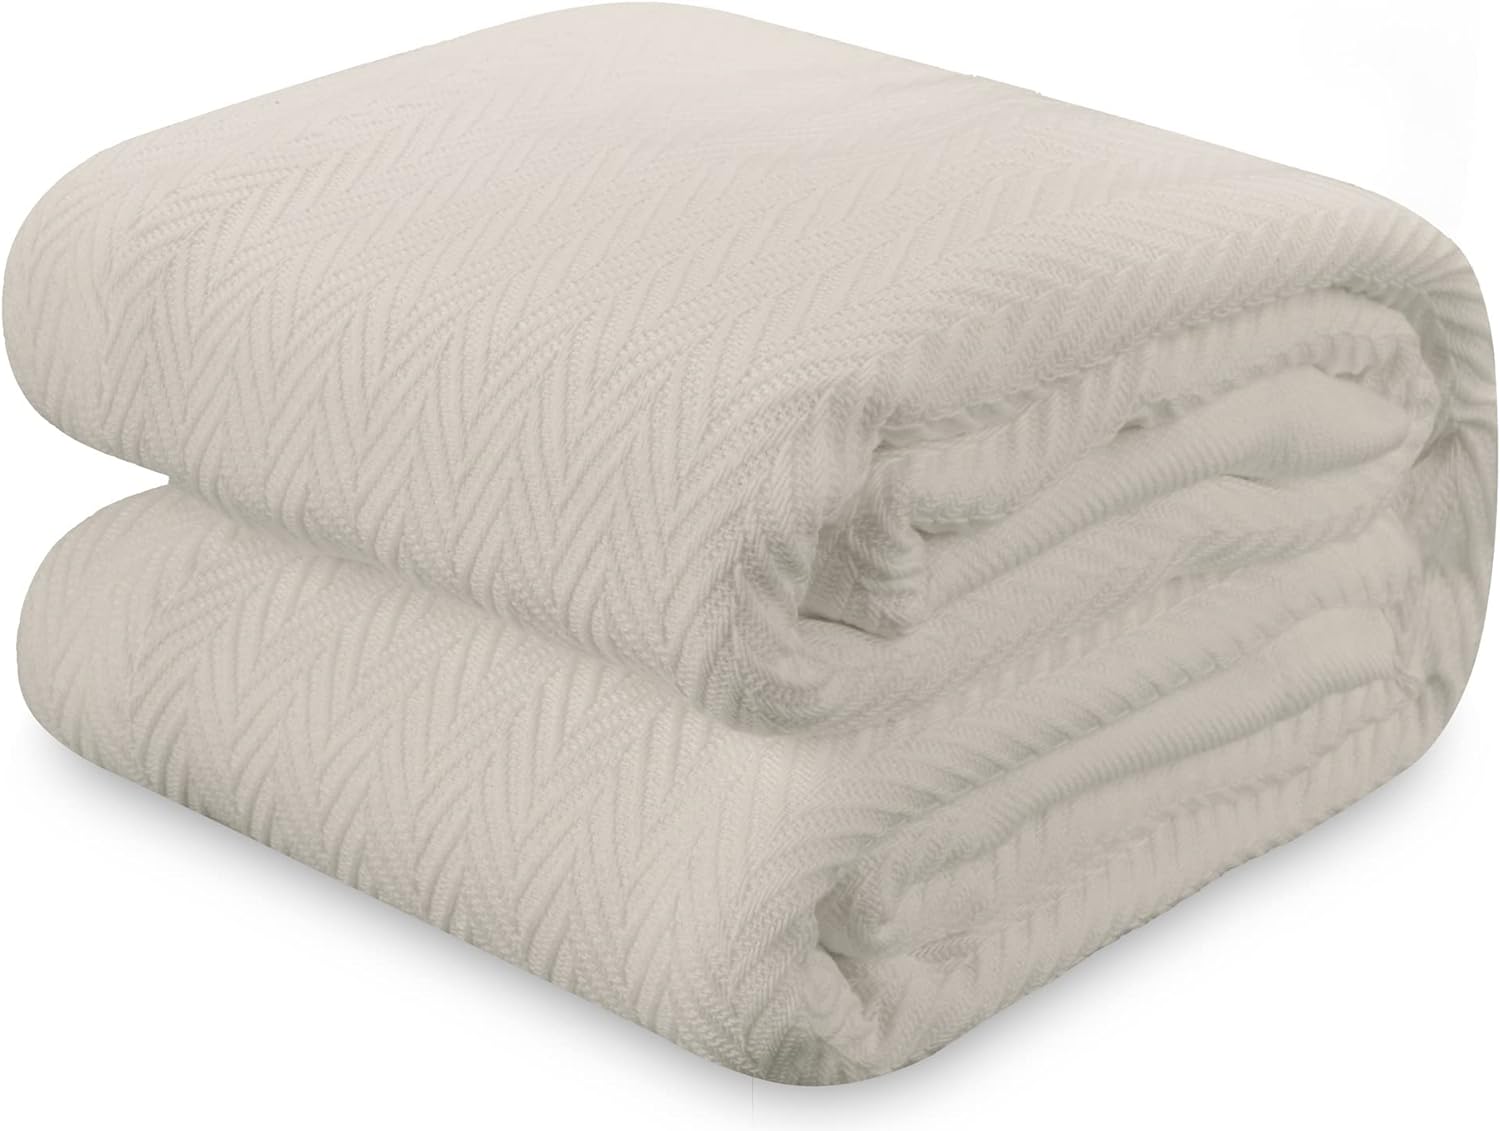 THREAD SPREAD Organic GOTS Certified Cotton Blanket, Twin/Twin XL - 350 GSM, Antistatic, Fuzzy Soft, Lightweight, Sofa, Camping & Travel, All-Season Herringbone Throw, Biege + Stylish Bonus Tote Bag